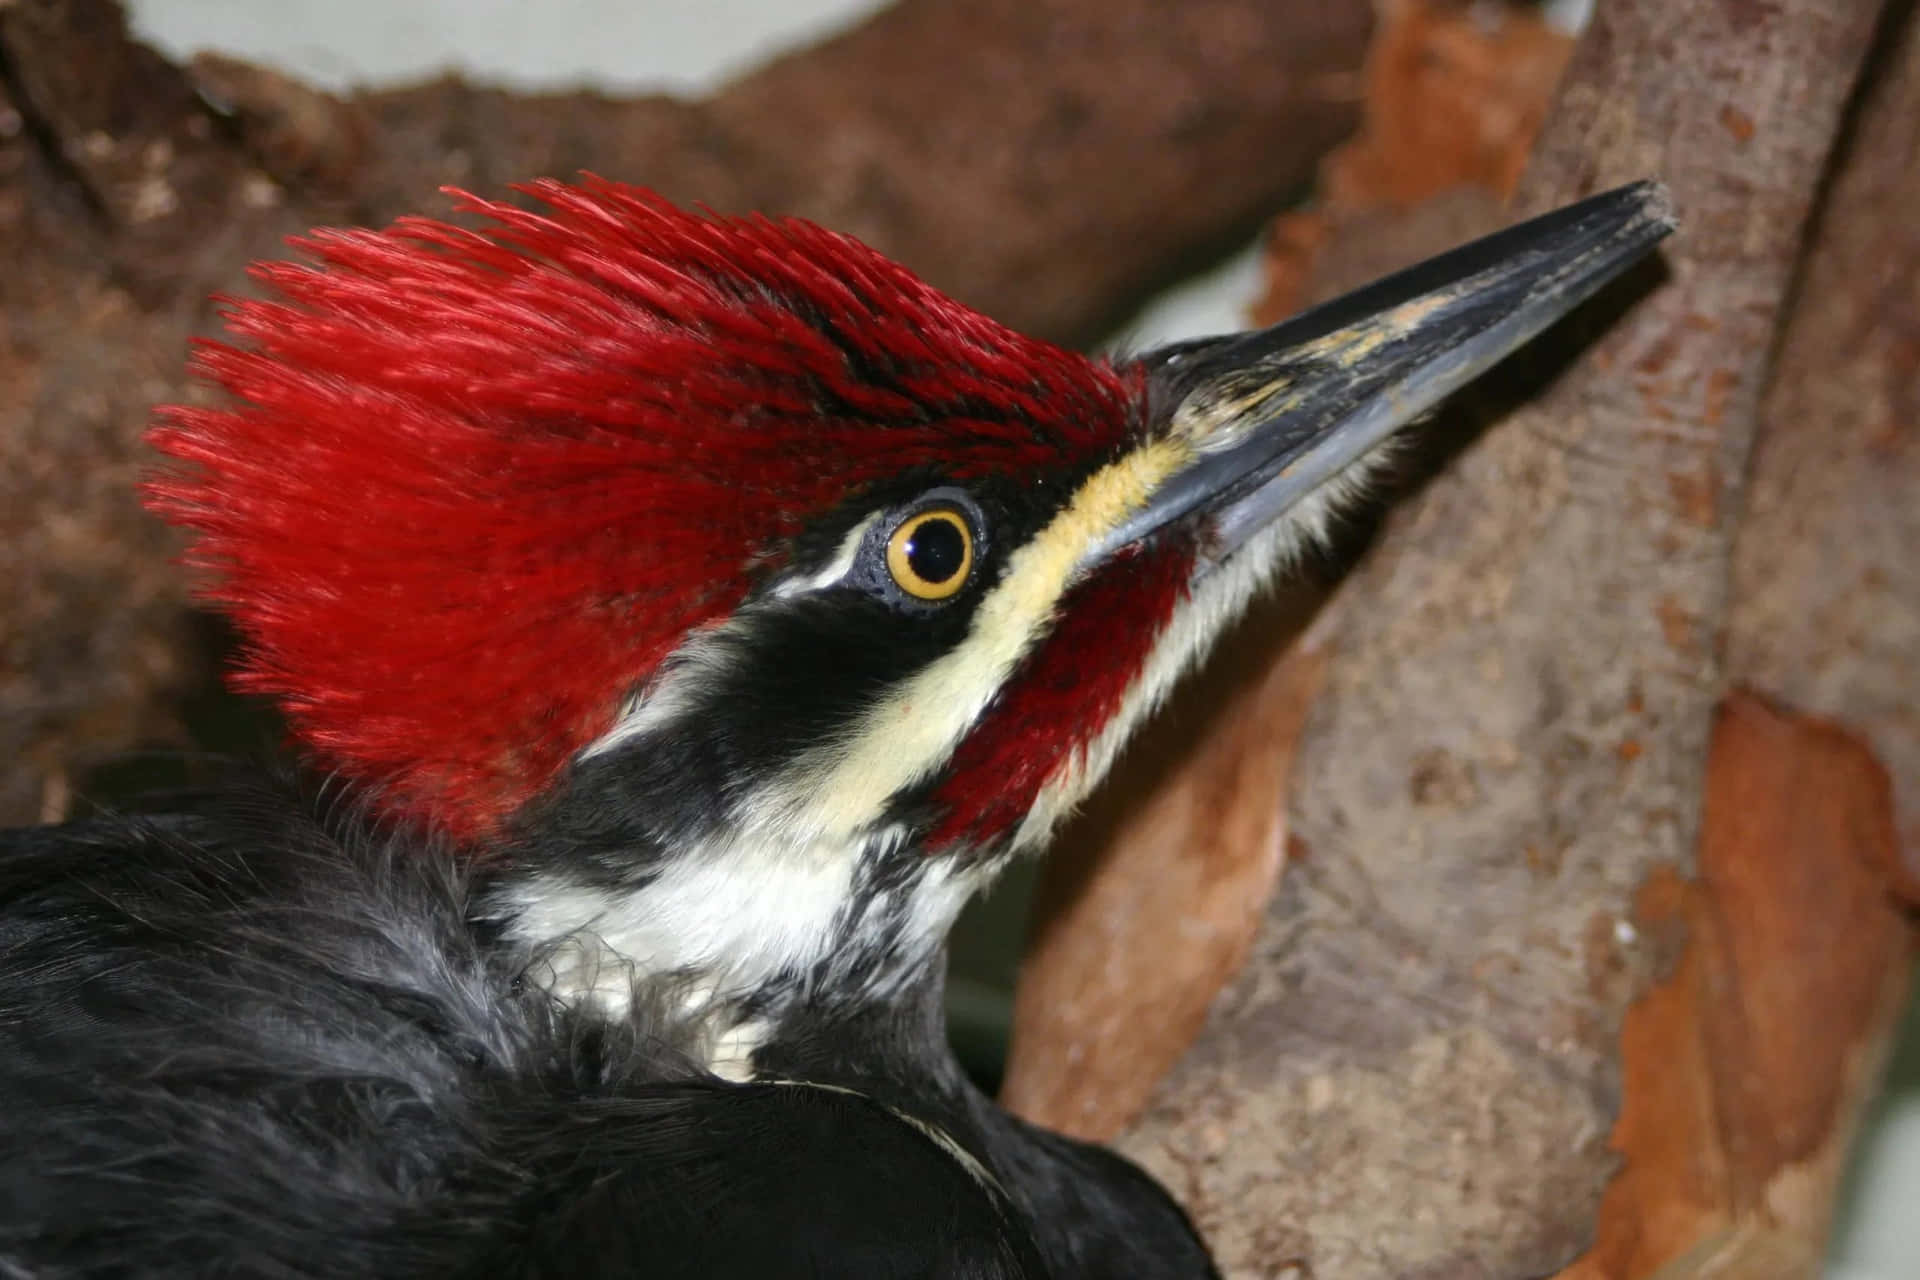 A vibrant woodpecker takes a break perched atop a tree branch.